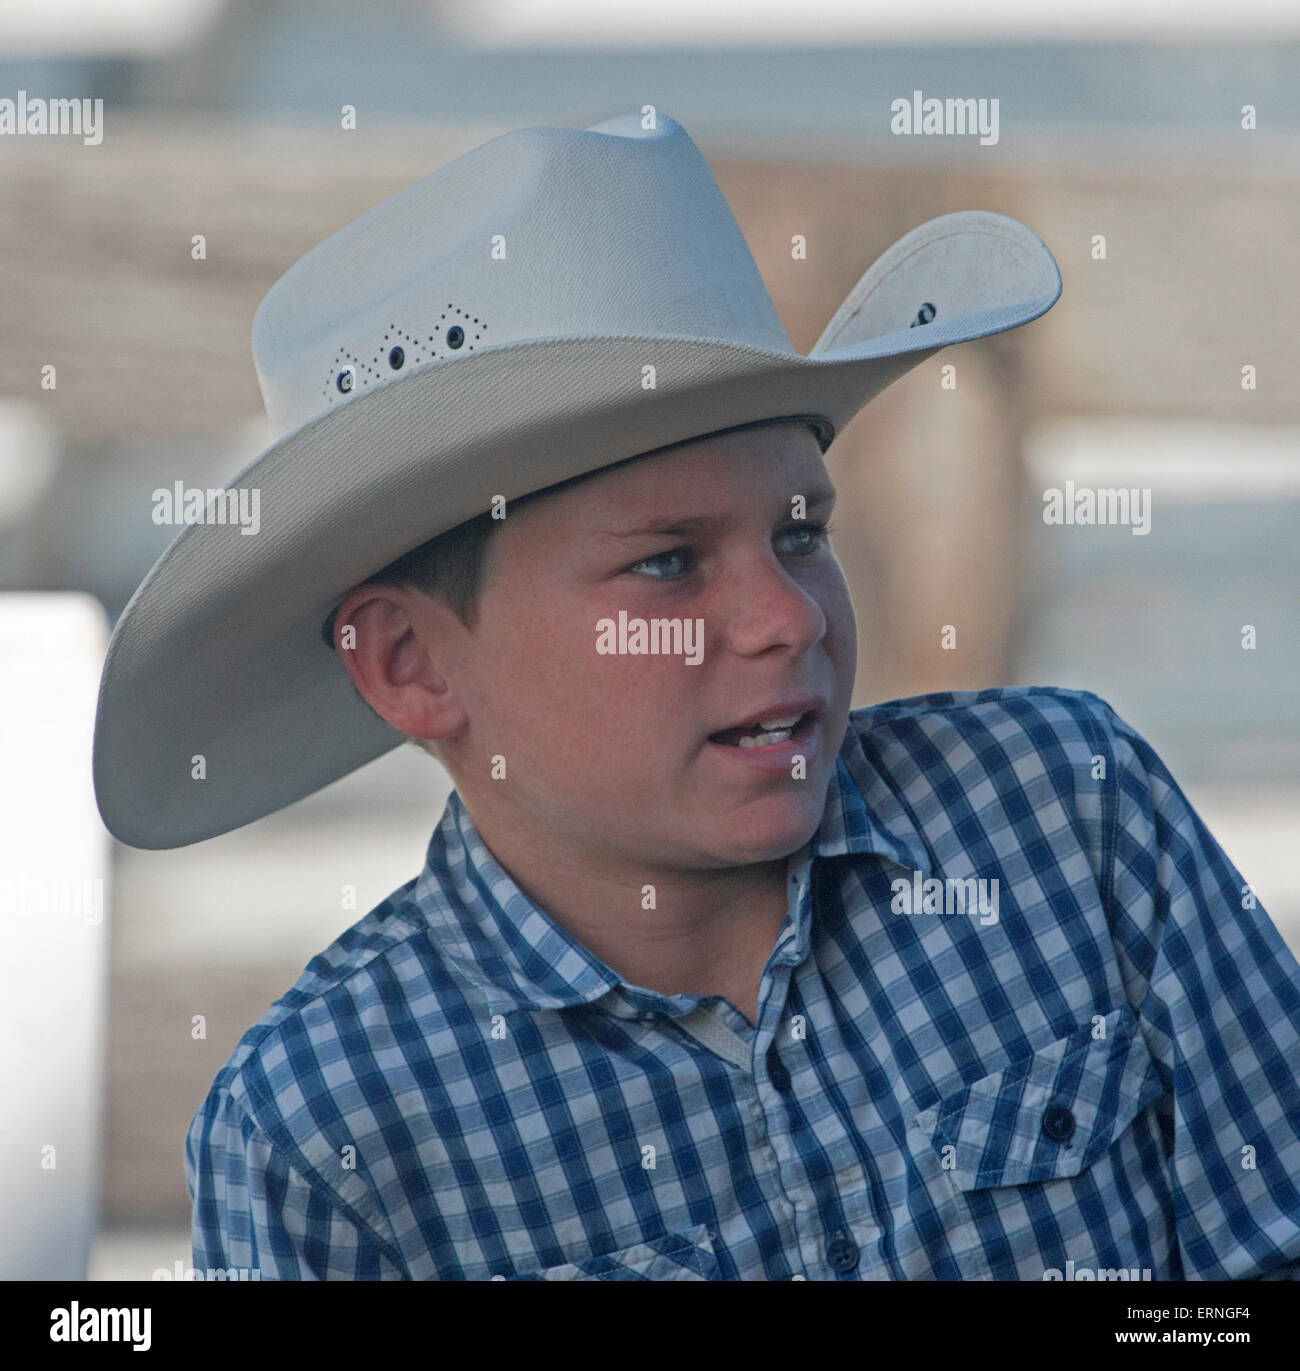 Young Australian boy wearing blue check shirt and wearing white western cowboy style akubra hat Stock Photo